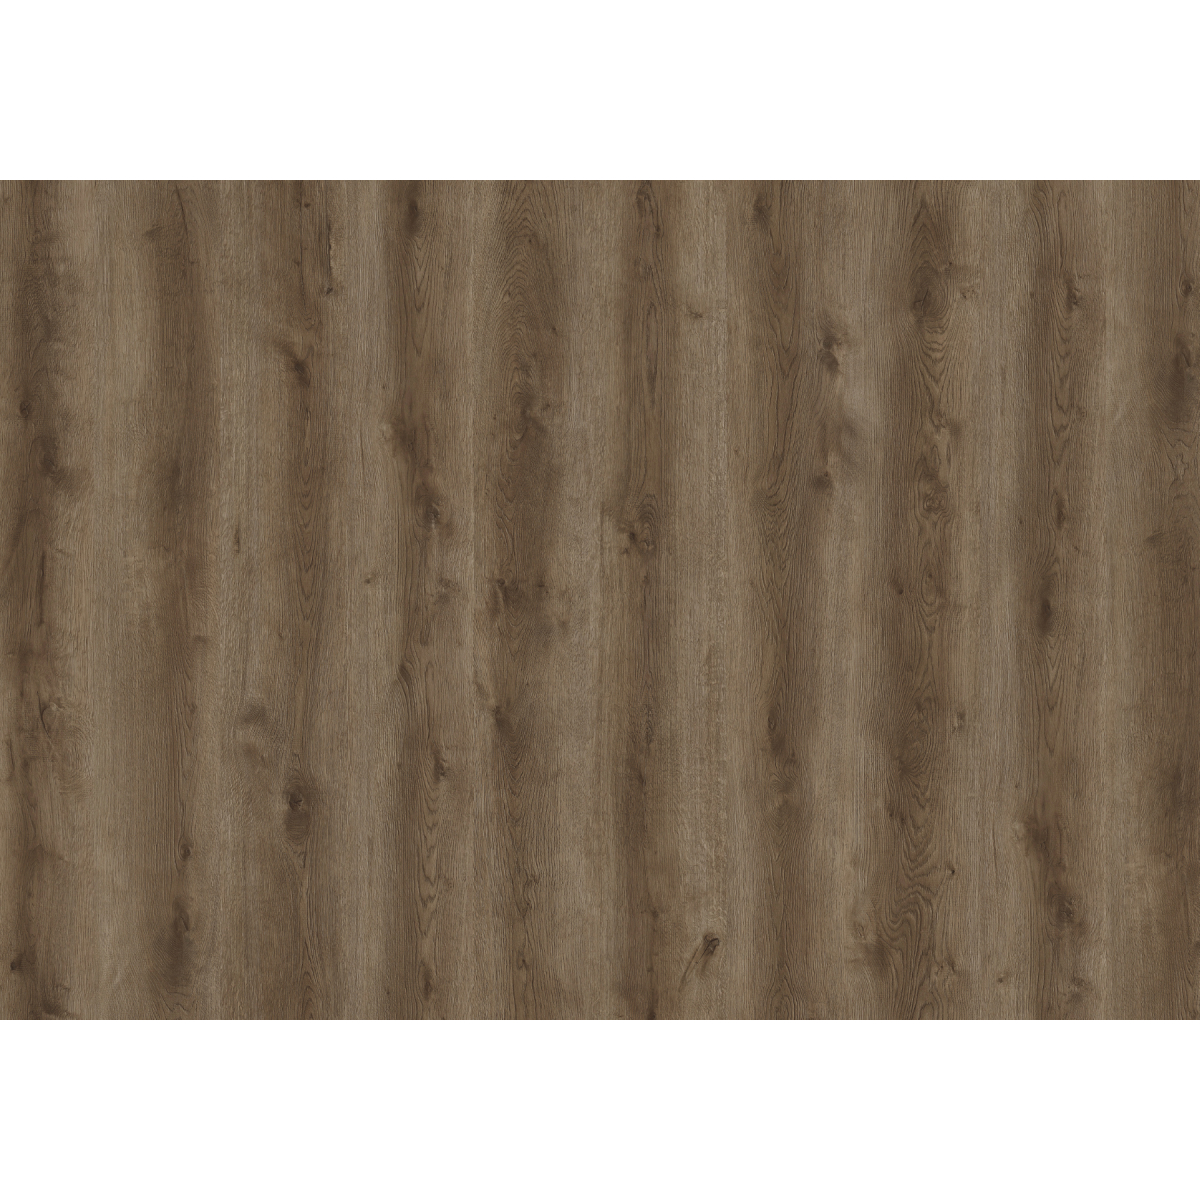 Ламинат Camsan Modern Long Овенкол 726, 2,13 кв.м, цвет коричневый